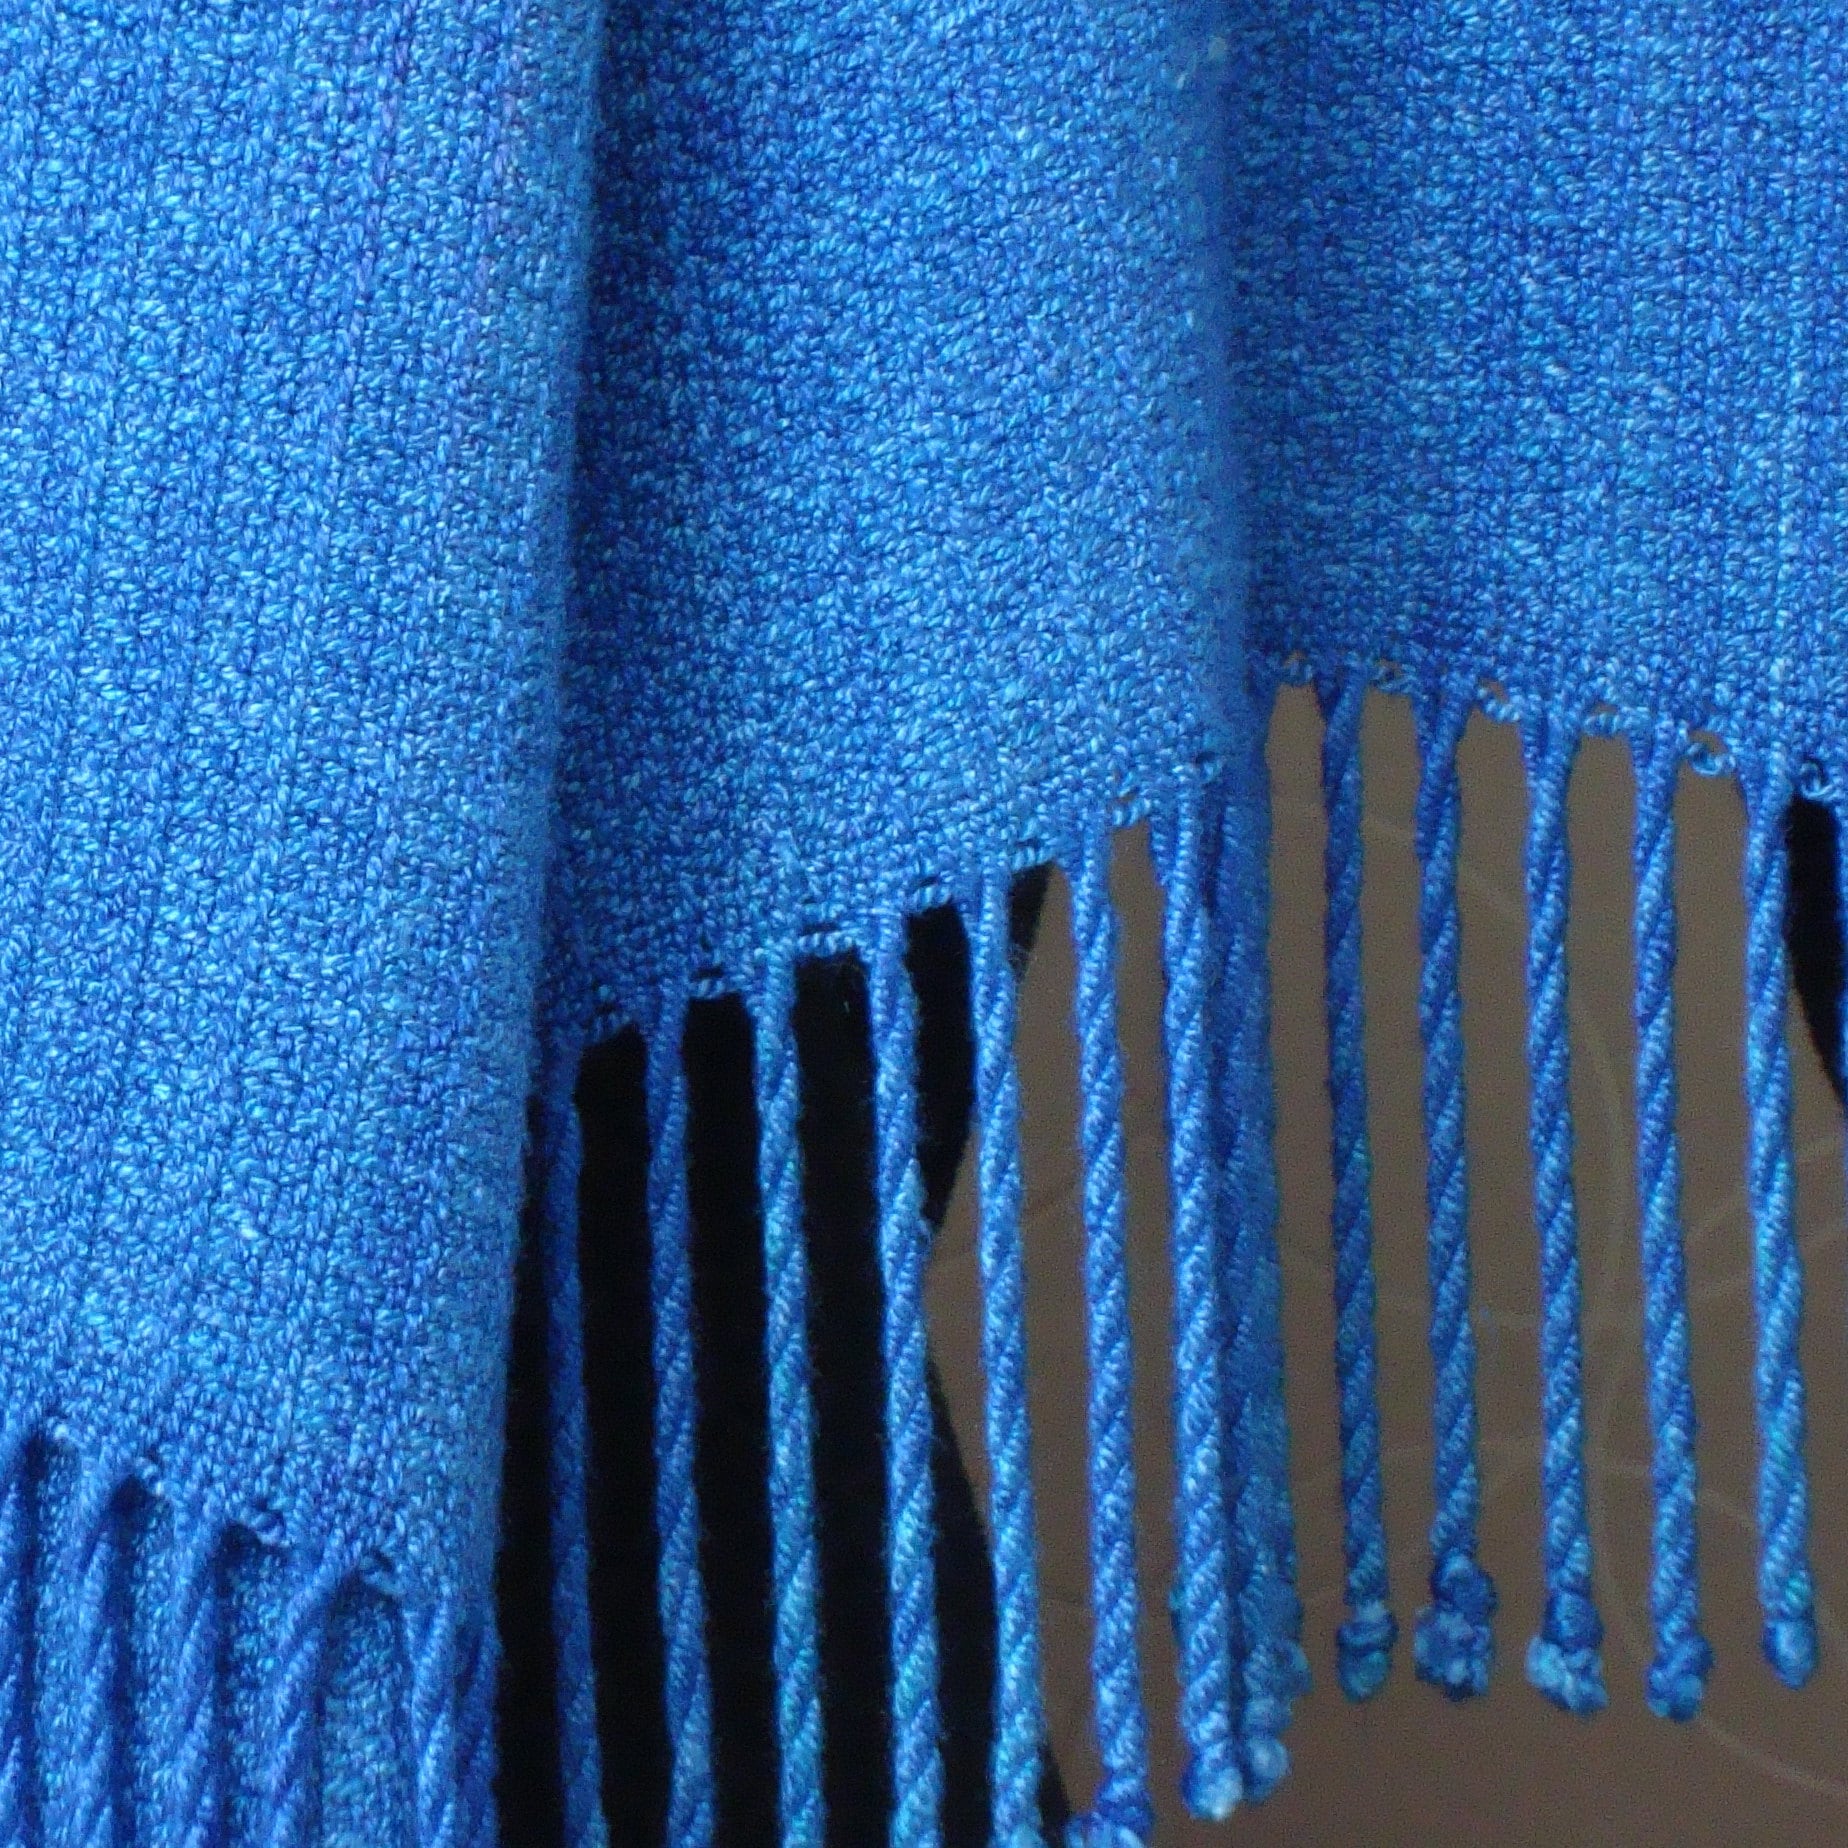 Cotton Weaving, Knitting, Crocheting Yarn Similar to 5/2 